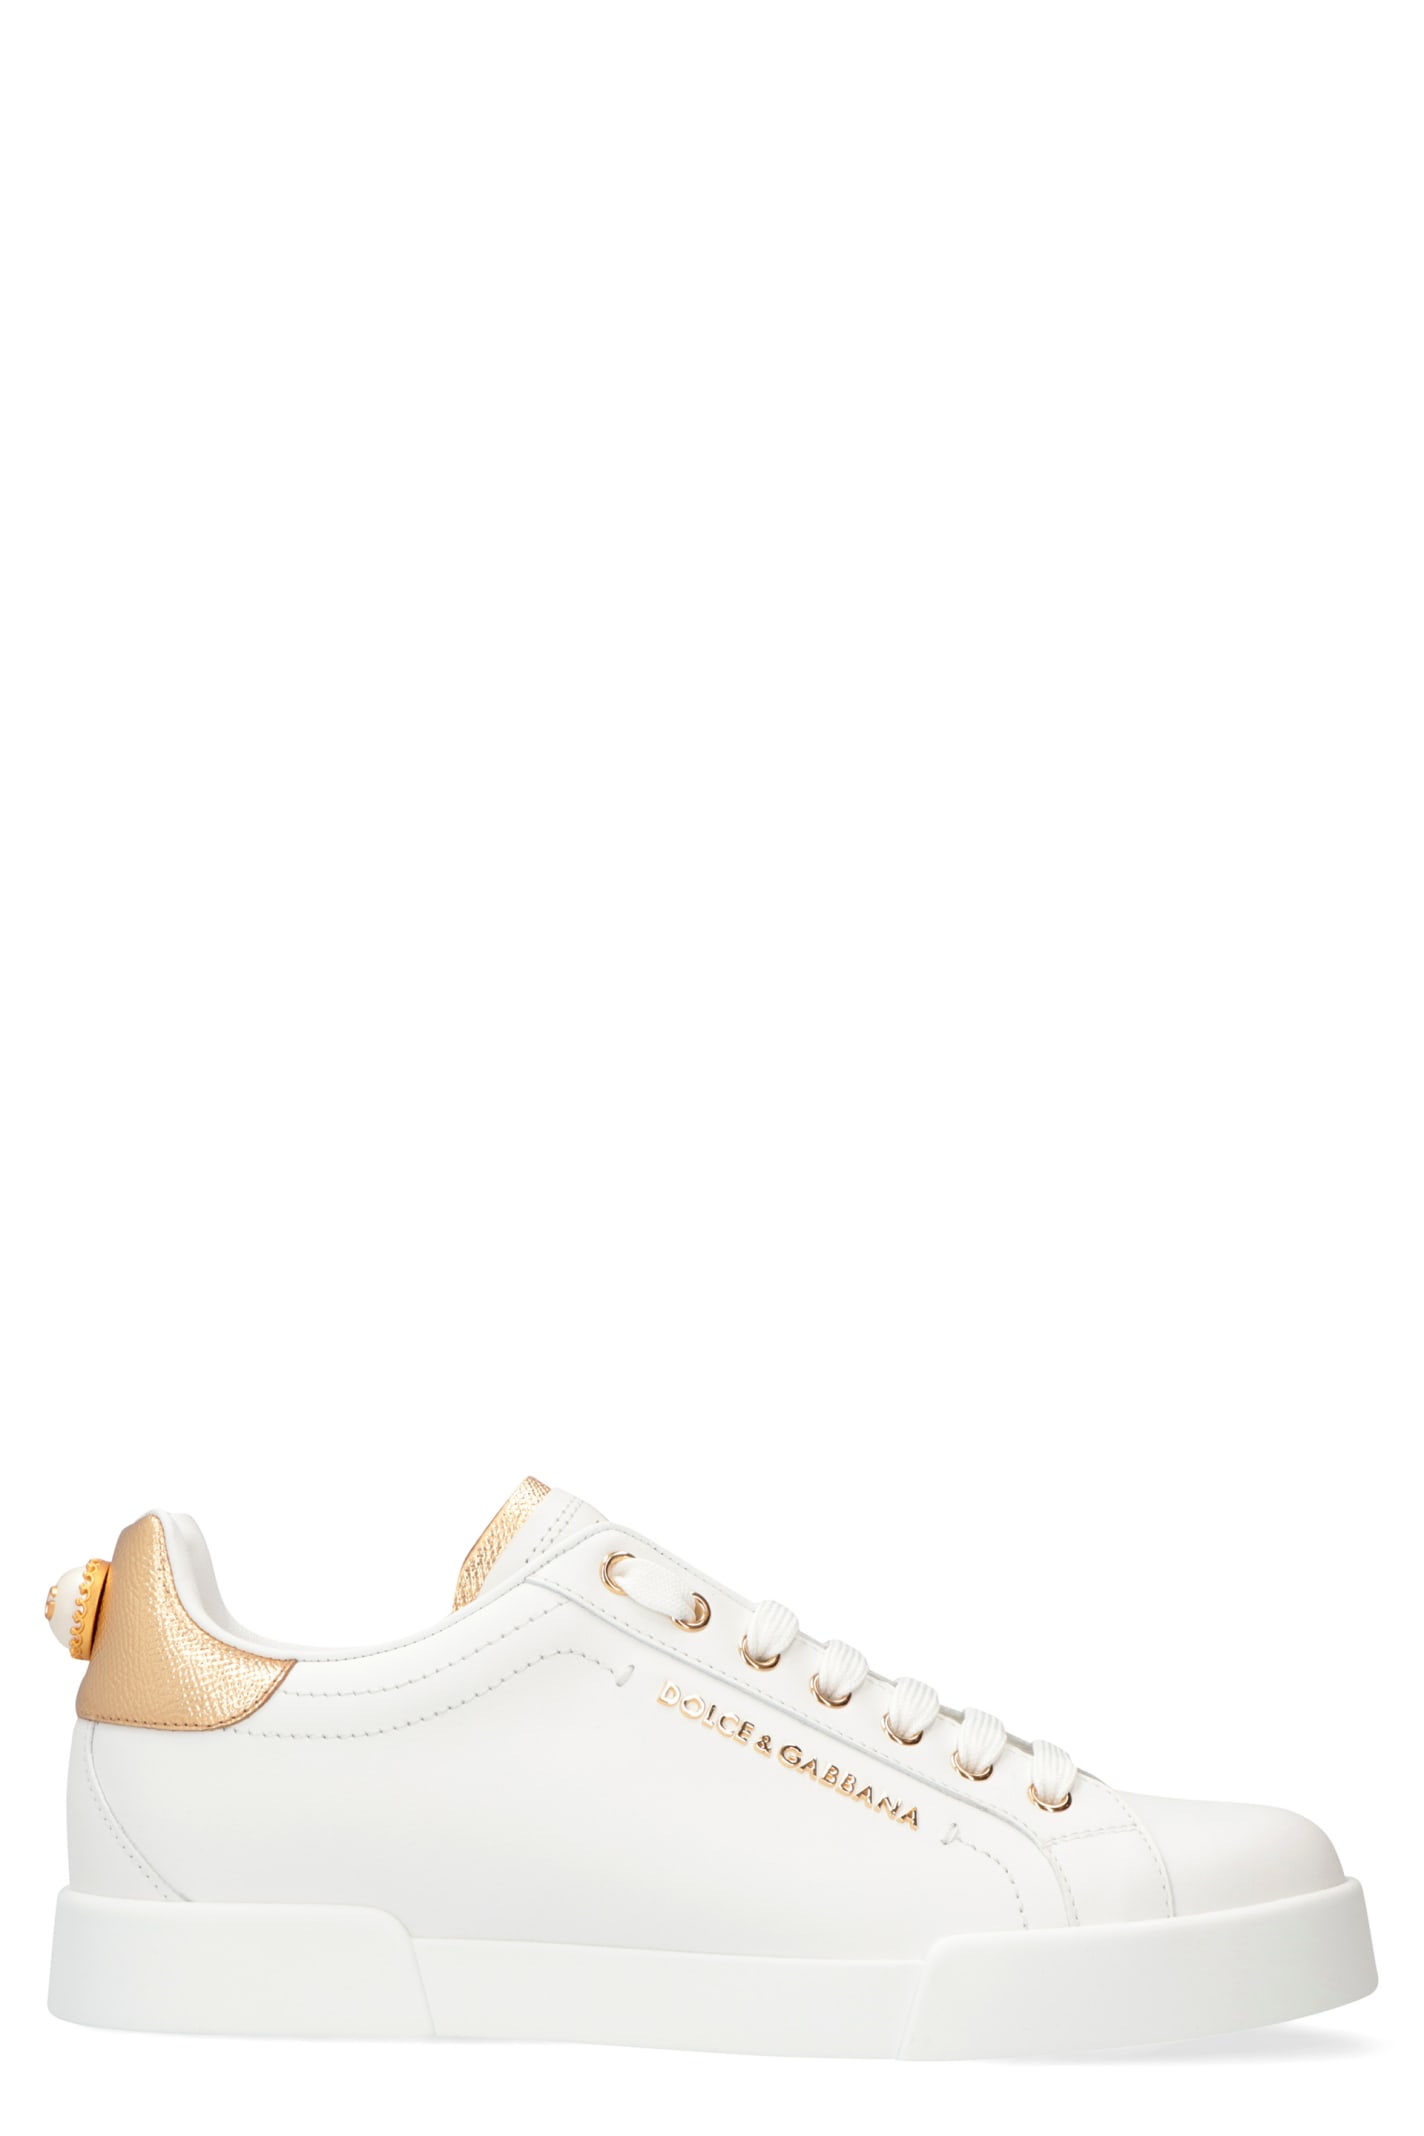 Dolce & Gabbana Portofino Leather Low-top Sneakers